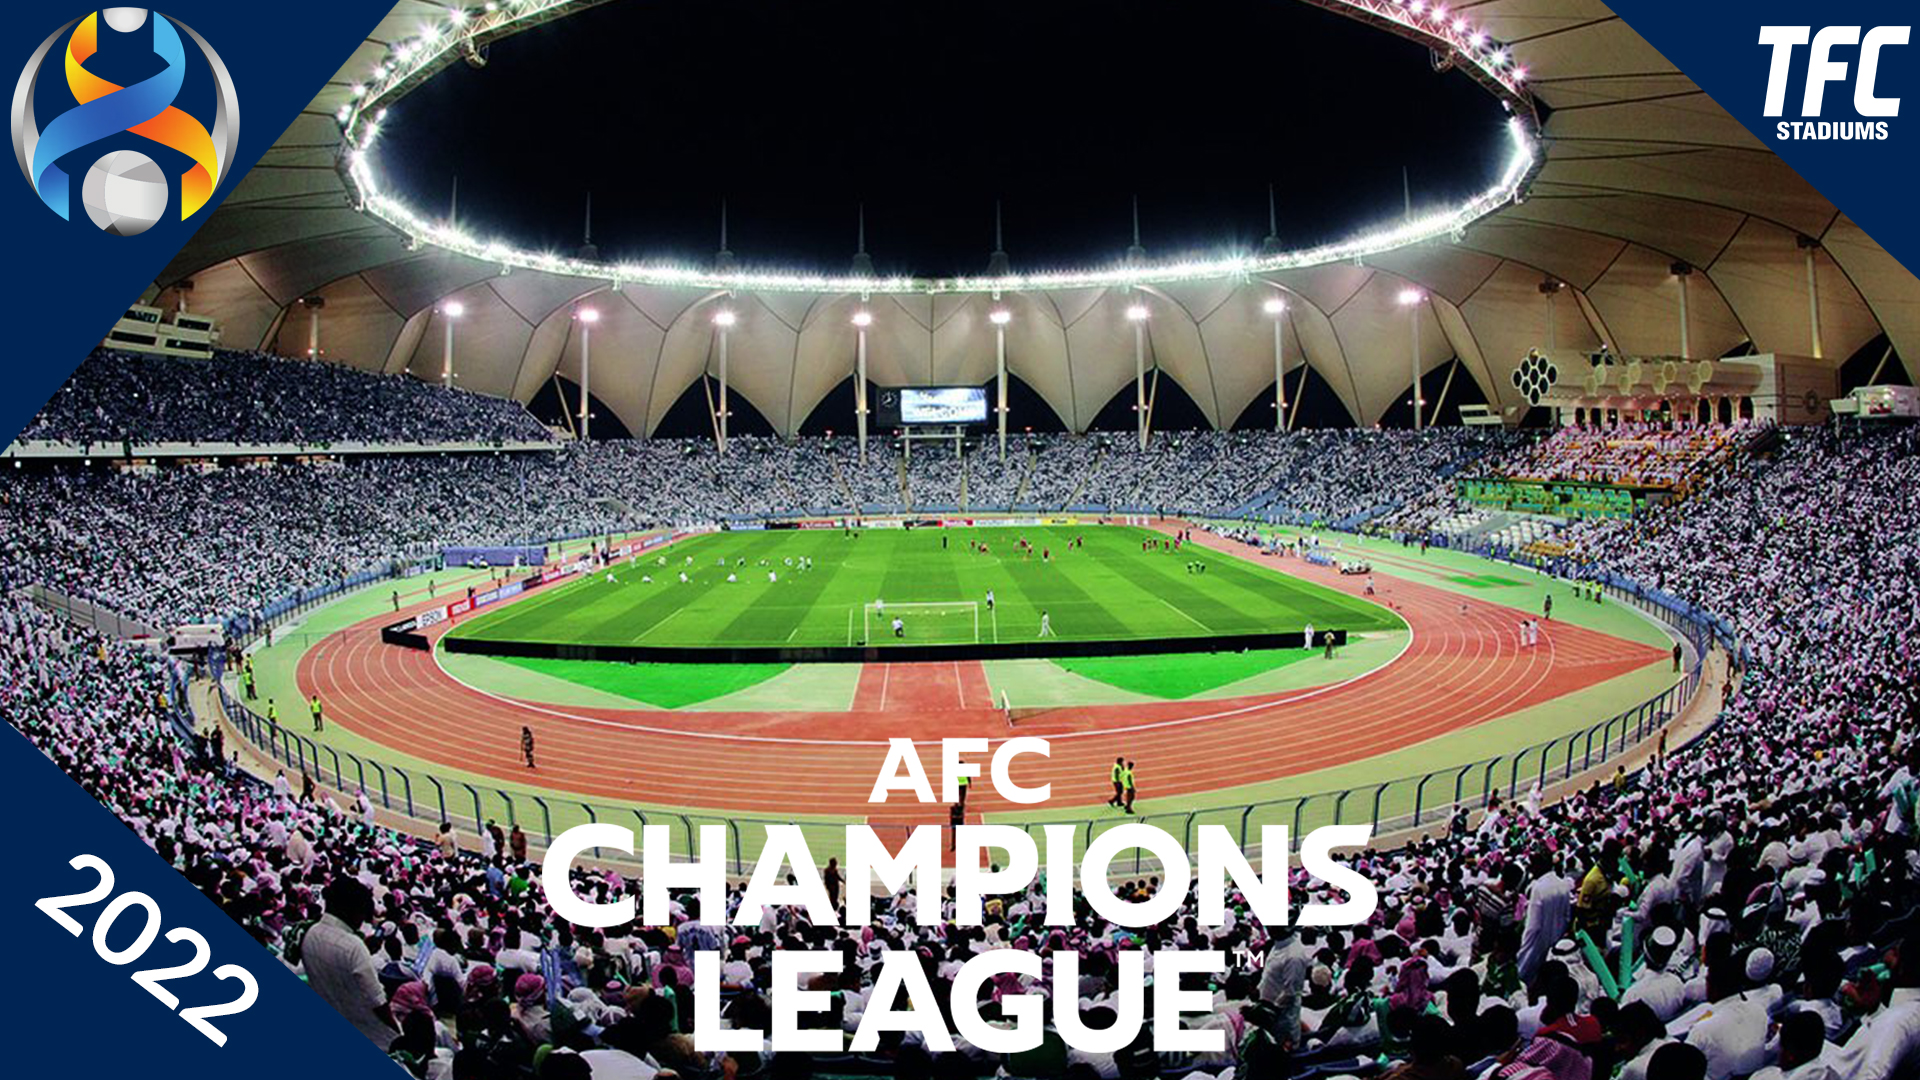 AFC Champions League 2022 Stadiums TFC Stadiums